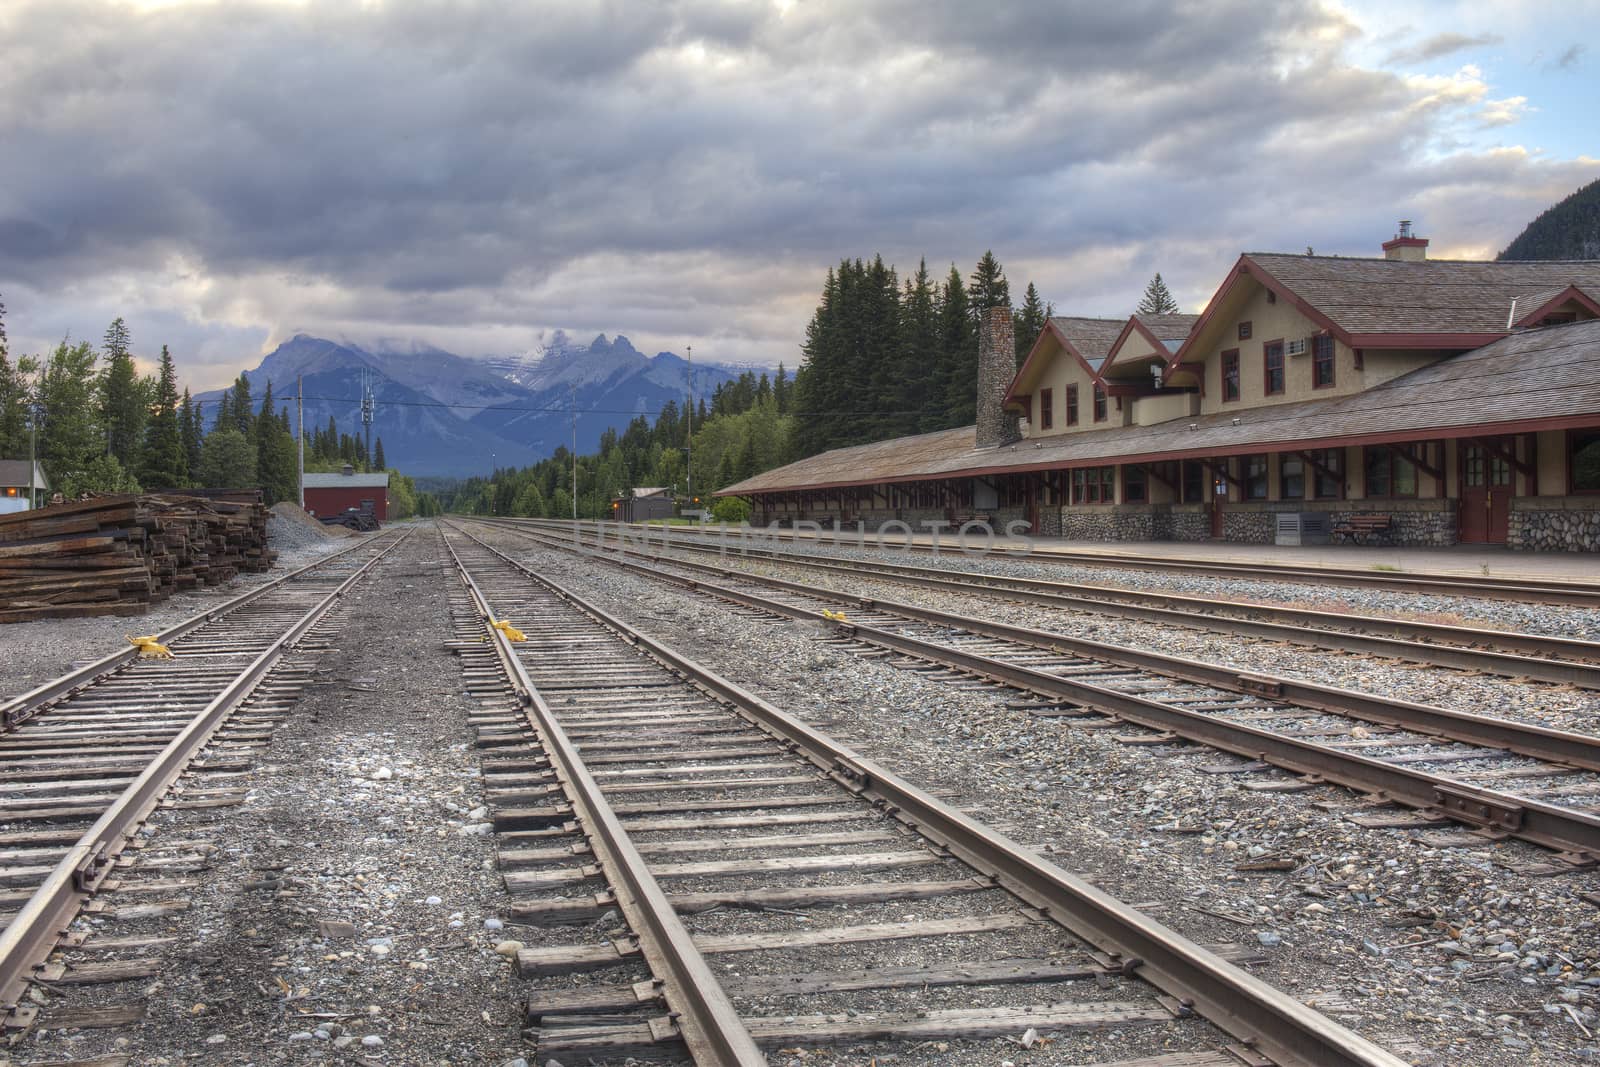 Historic Banff Train Station - Banff, Alberta, Canada by gonepaddling